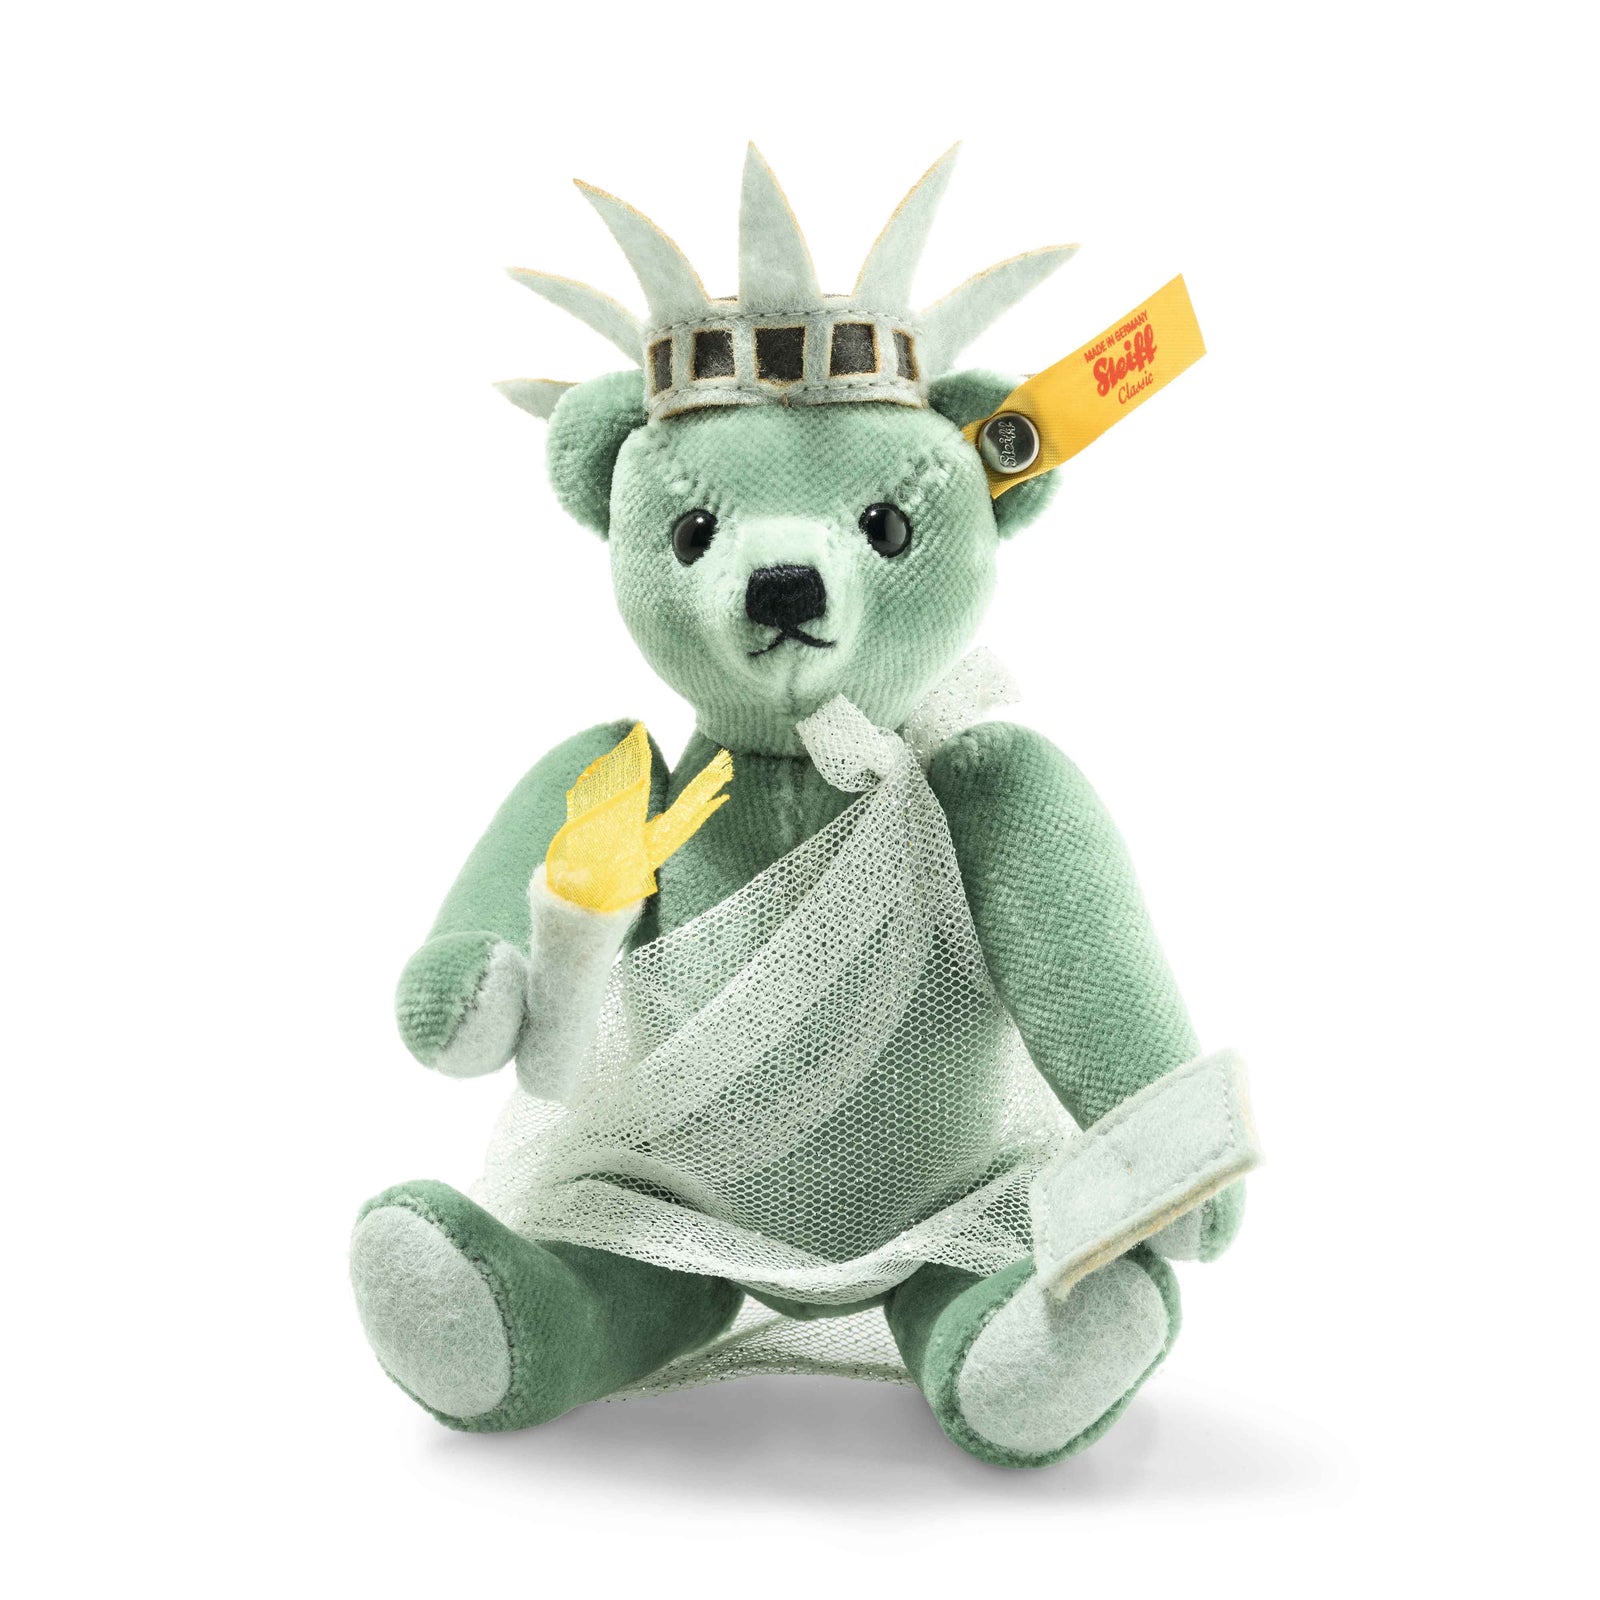 Steiff Great Escapes New York Teddy Bear in a Gift Box - EAN 026874